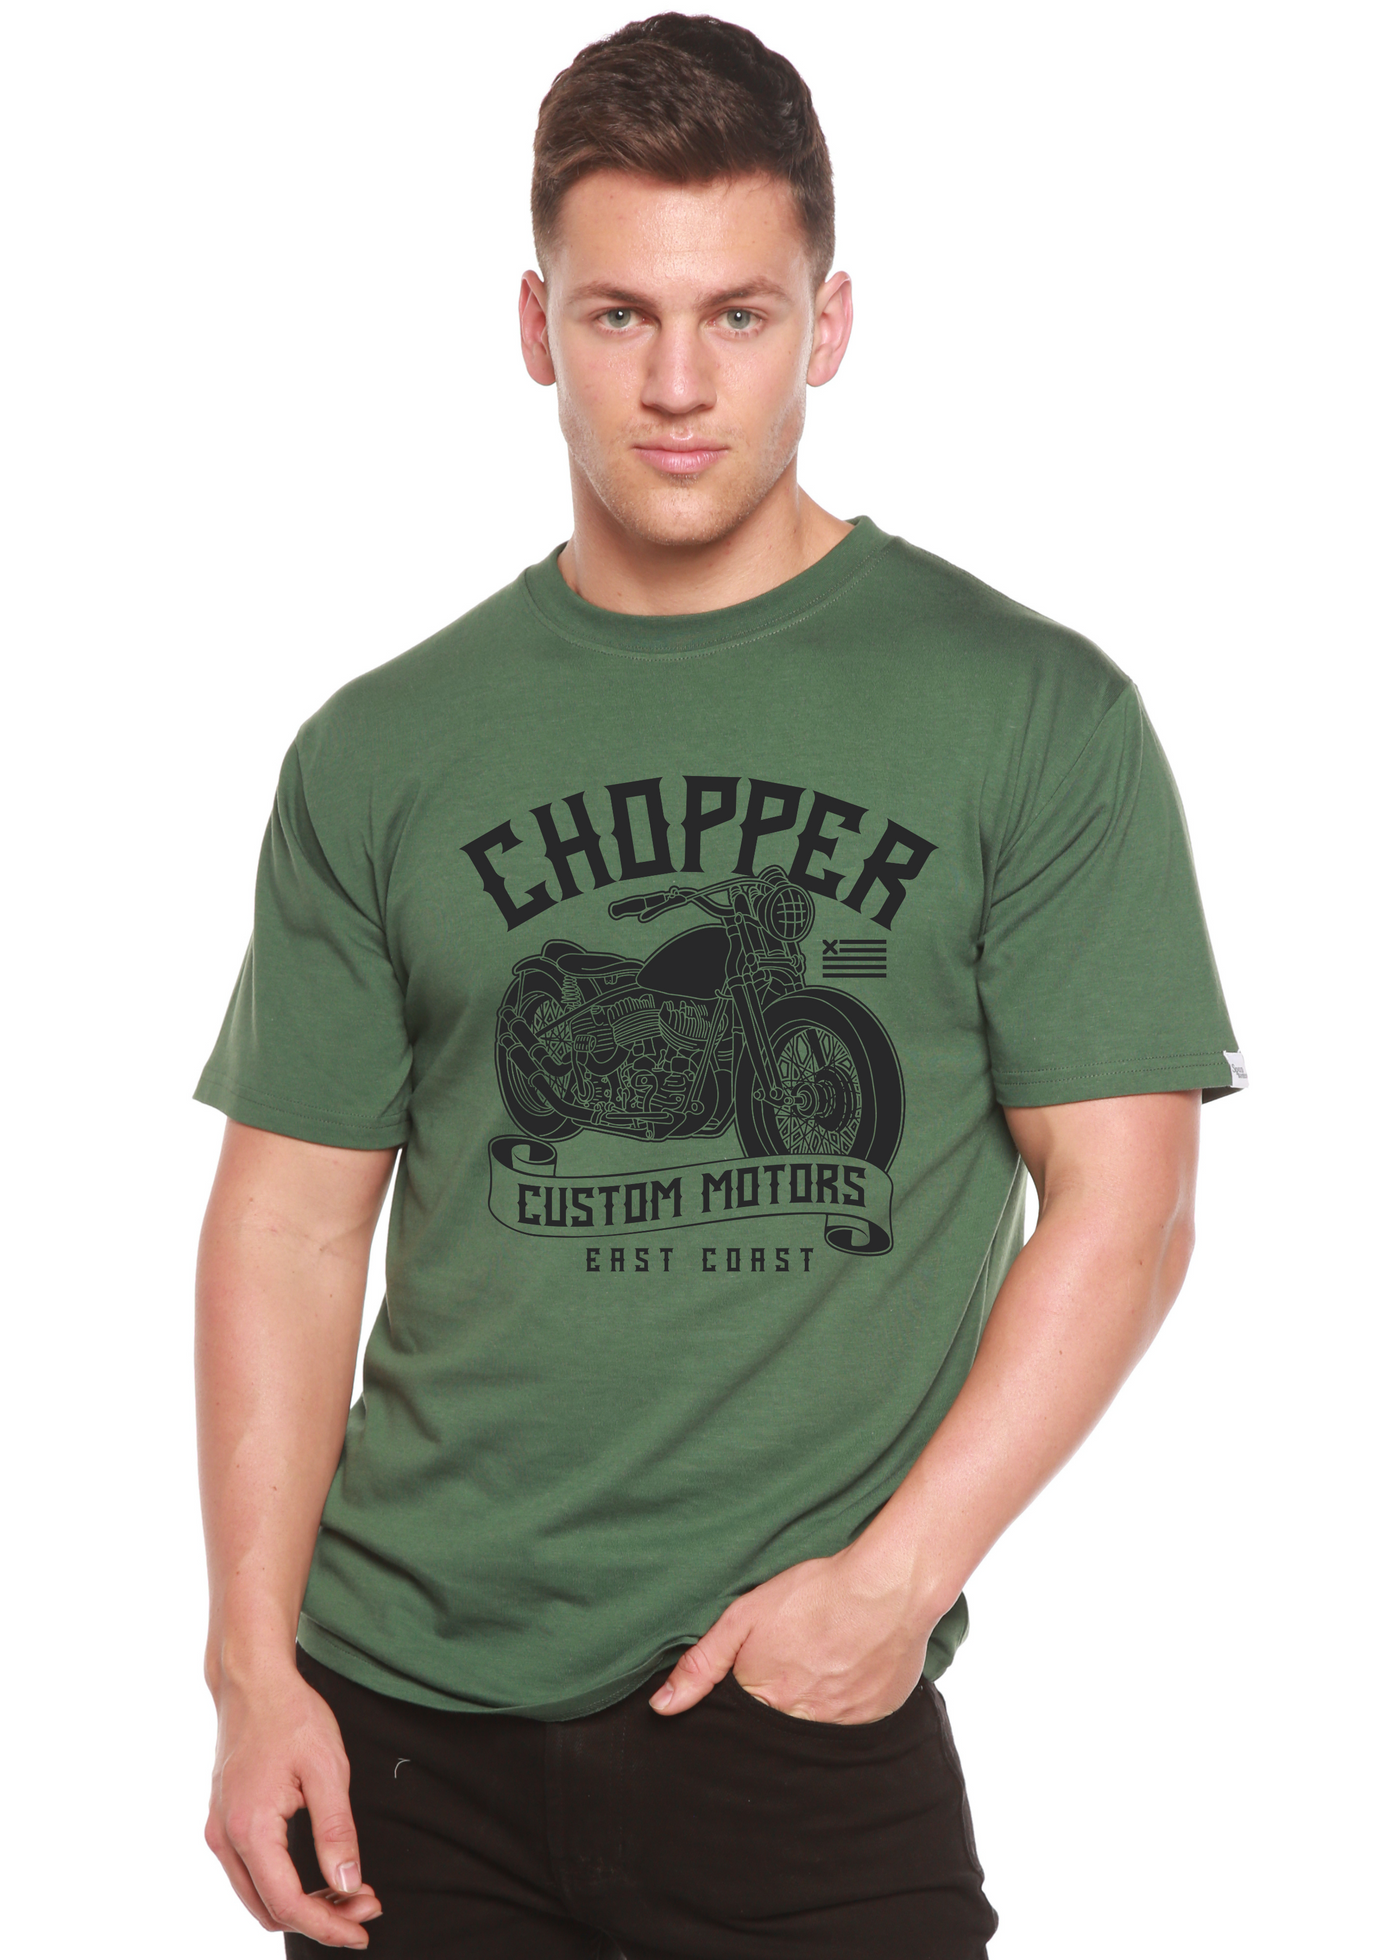 Chopper Custom Motors men's bamboo tshirt pine green